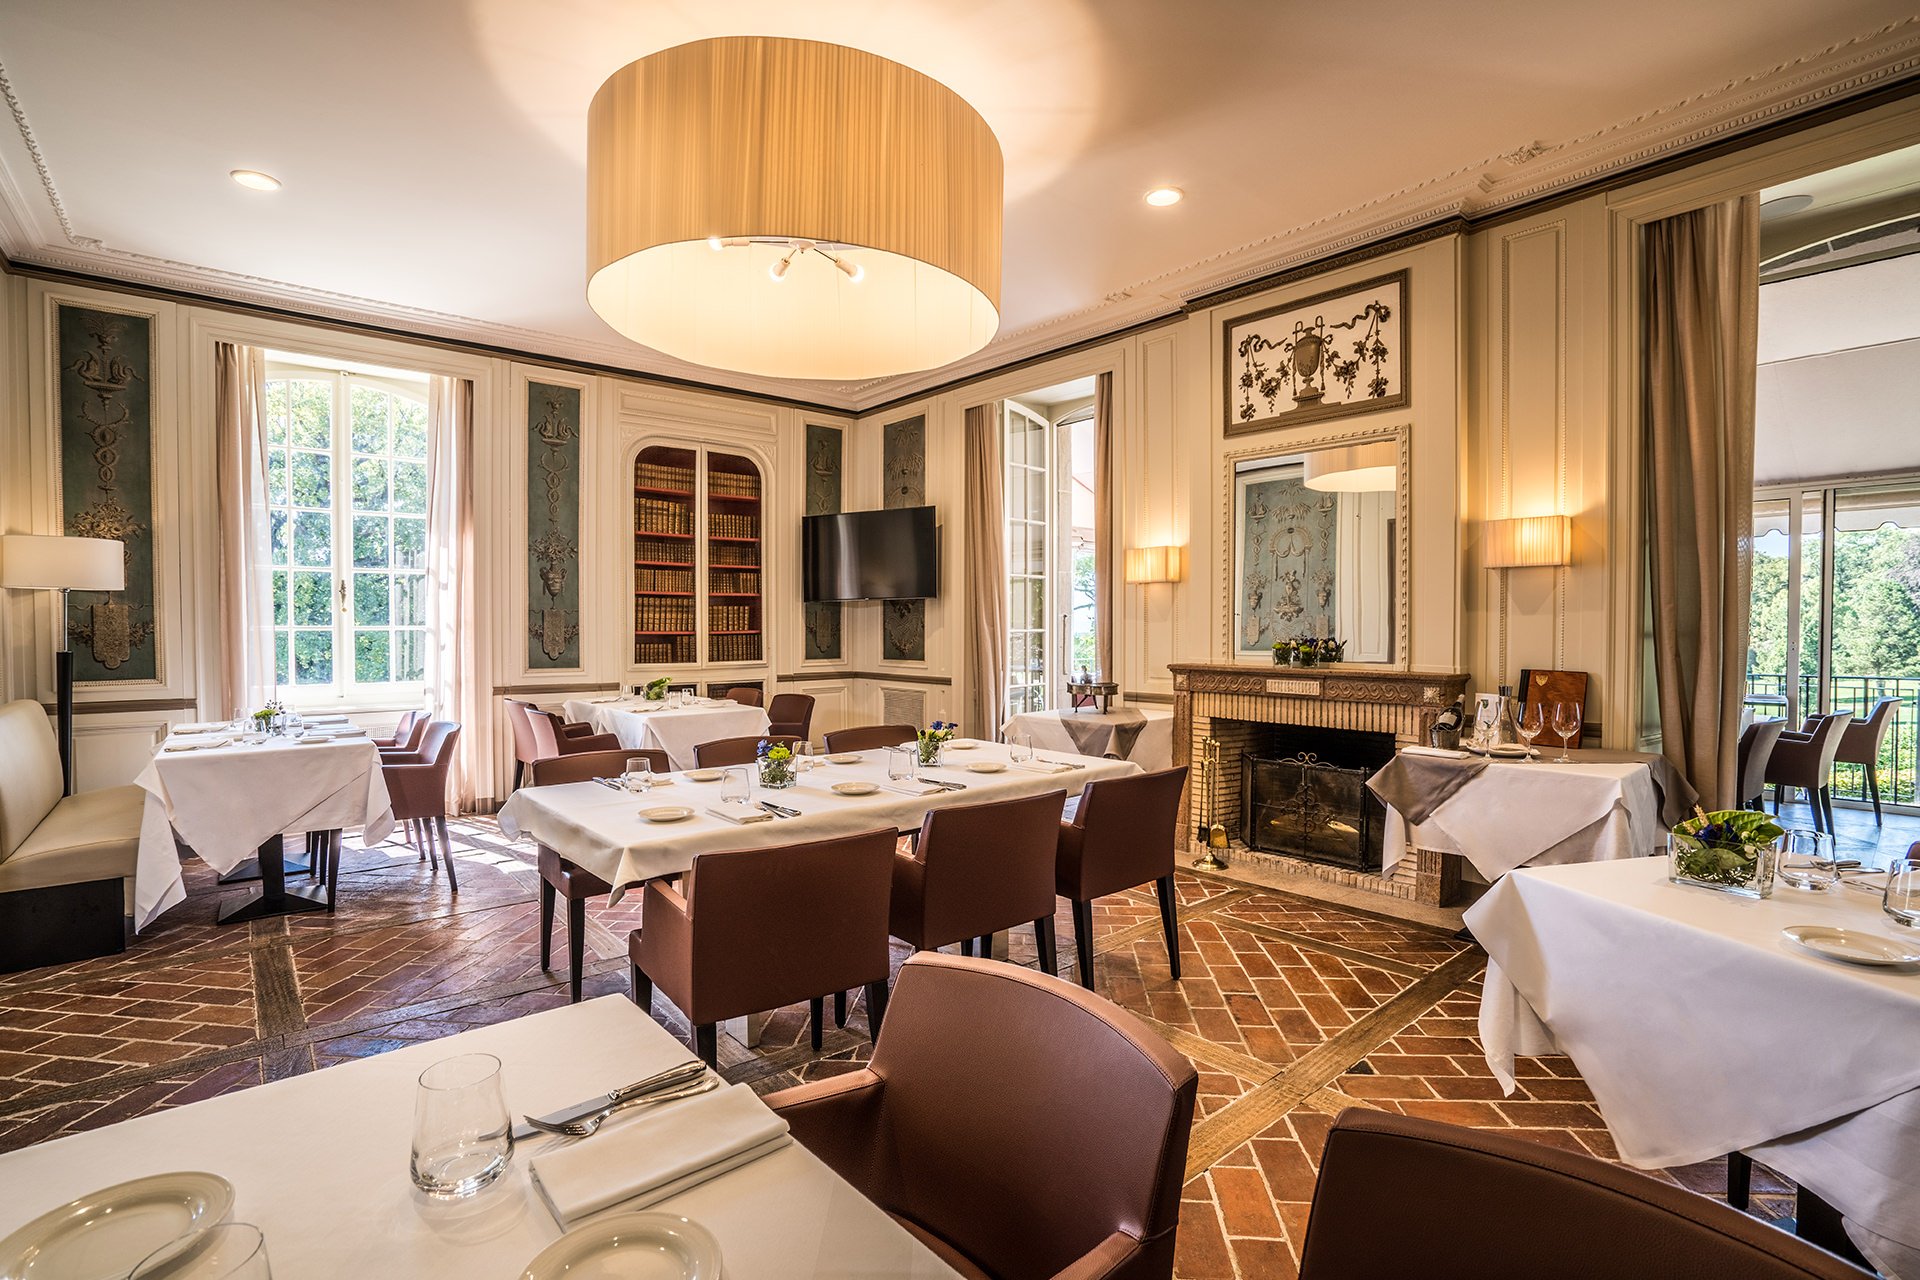 6. Chateau De Bonmont Restaurant Trianon Hotel Bonmont.jpg